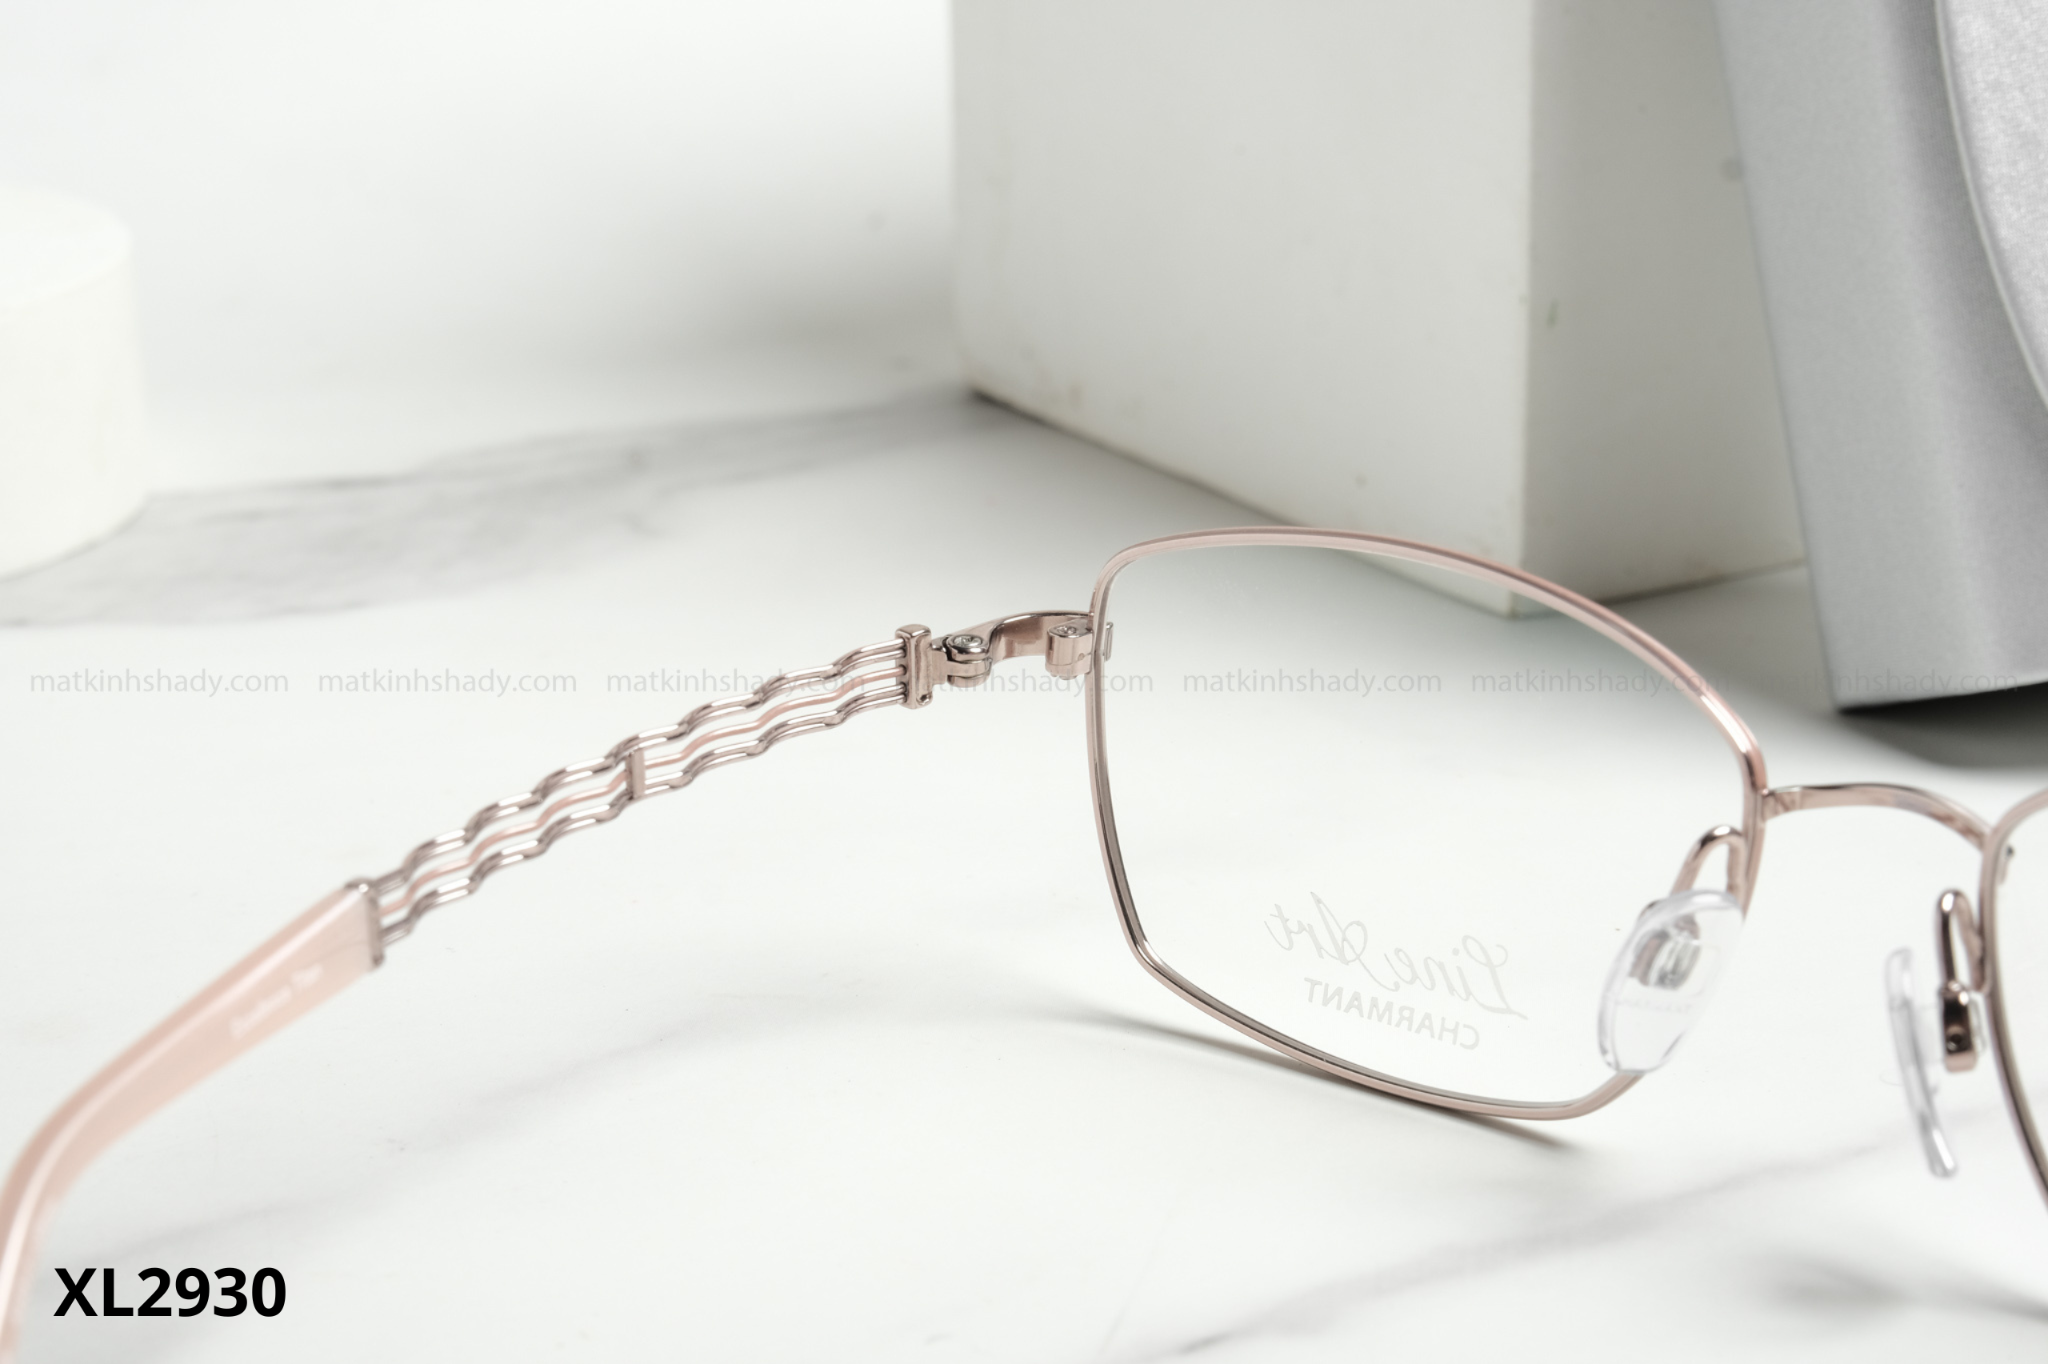  LINE ART CHARMANT Eyewear - Glasses - XL2930 